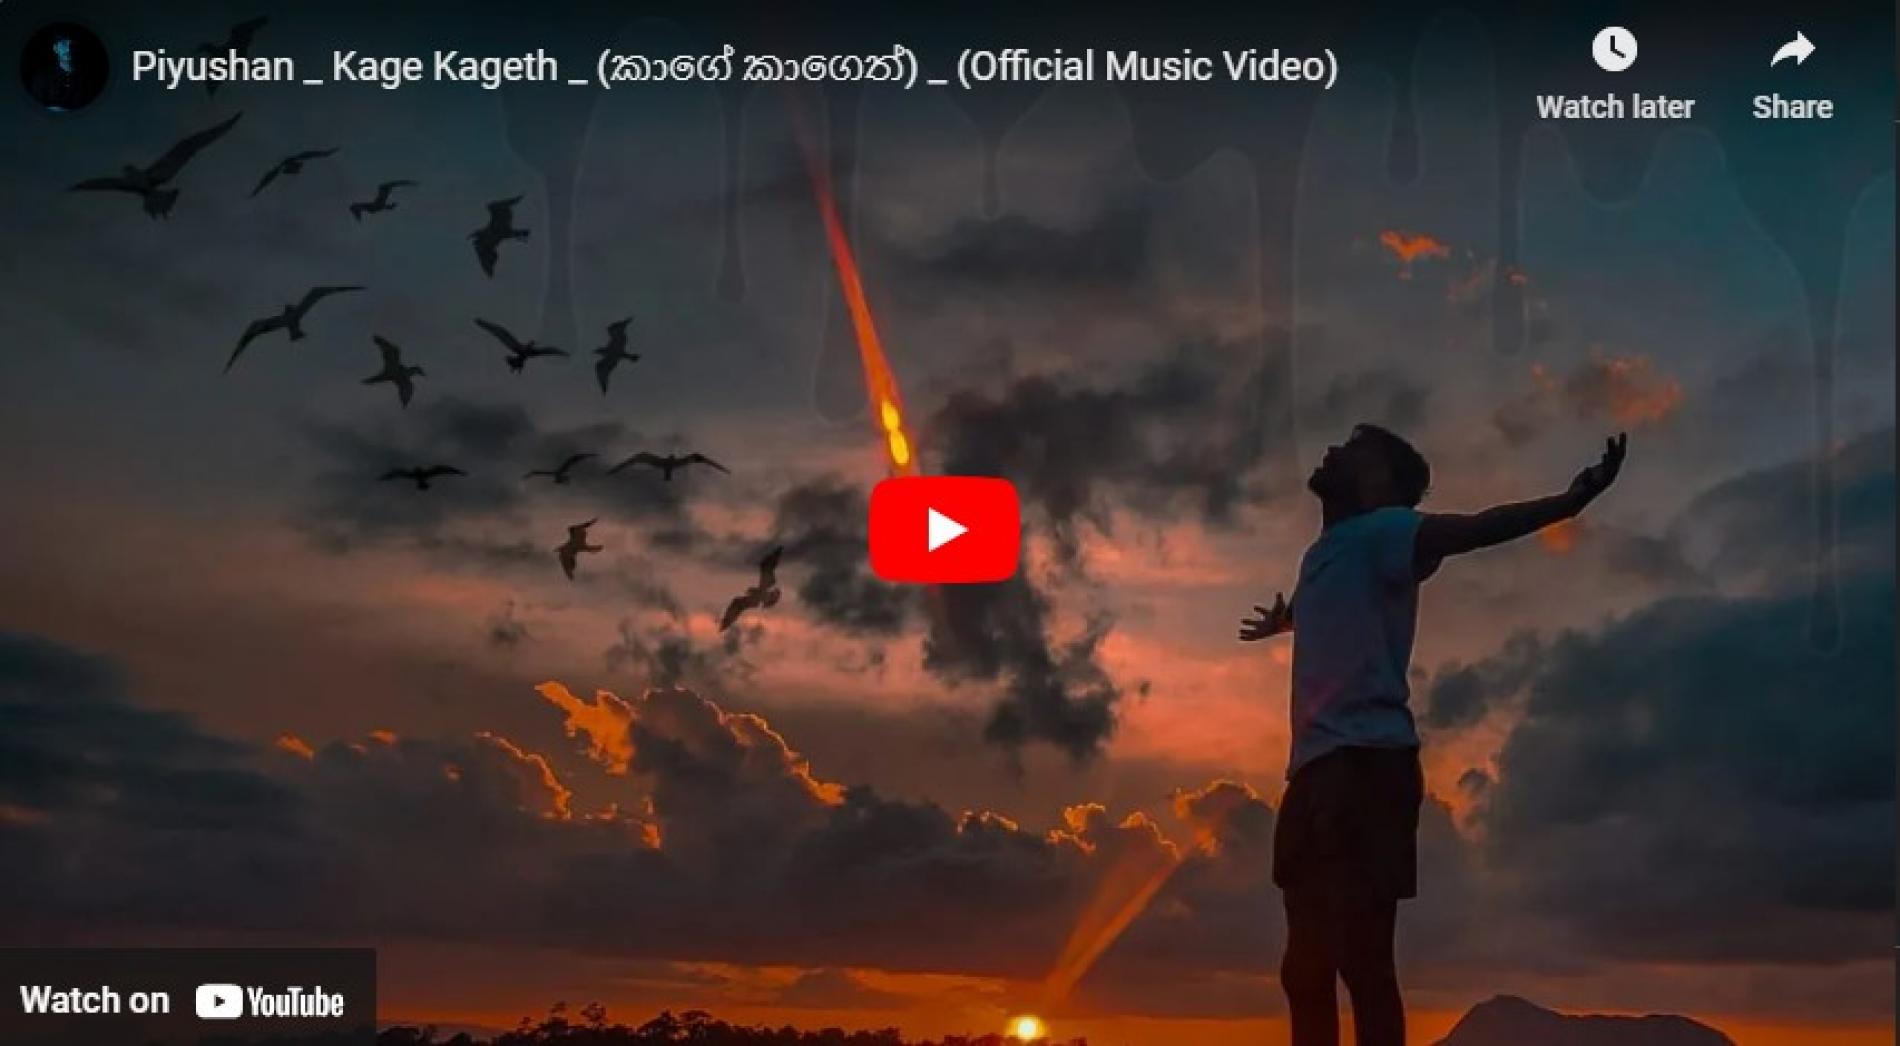 New Music : Piyushan _ Kage Kageth _ (කාගේ කාගෙත්) _ (Official Music Video)